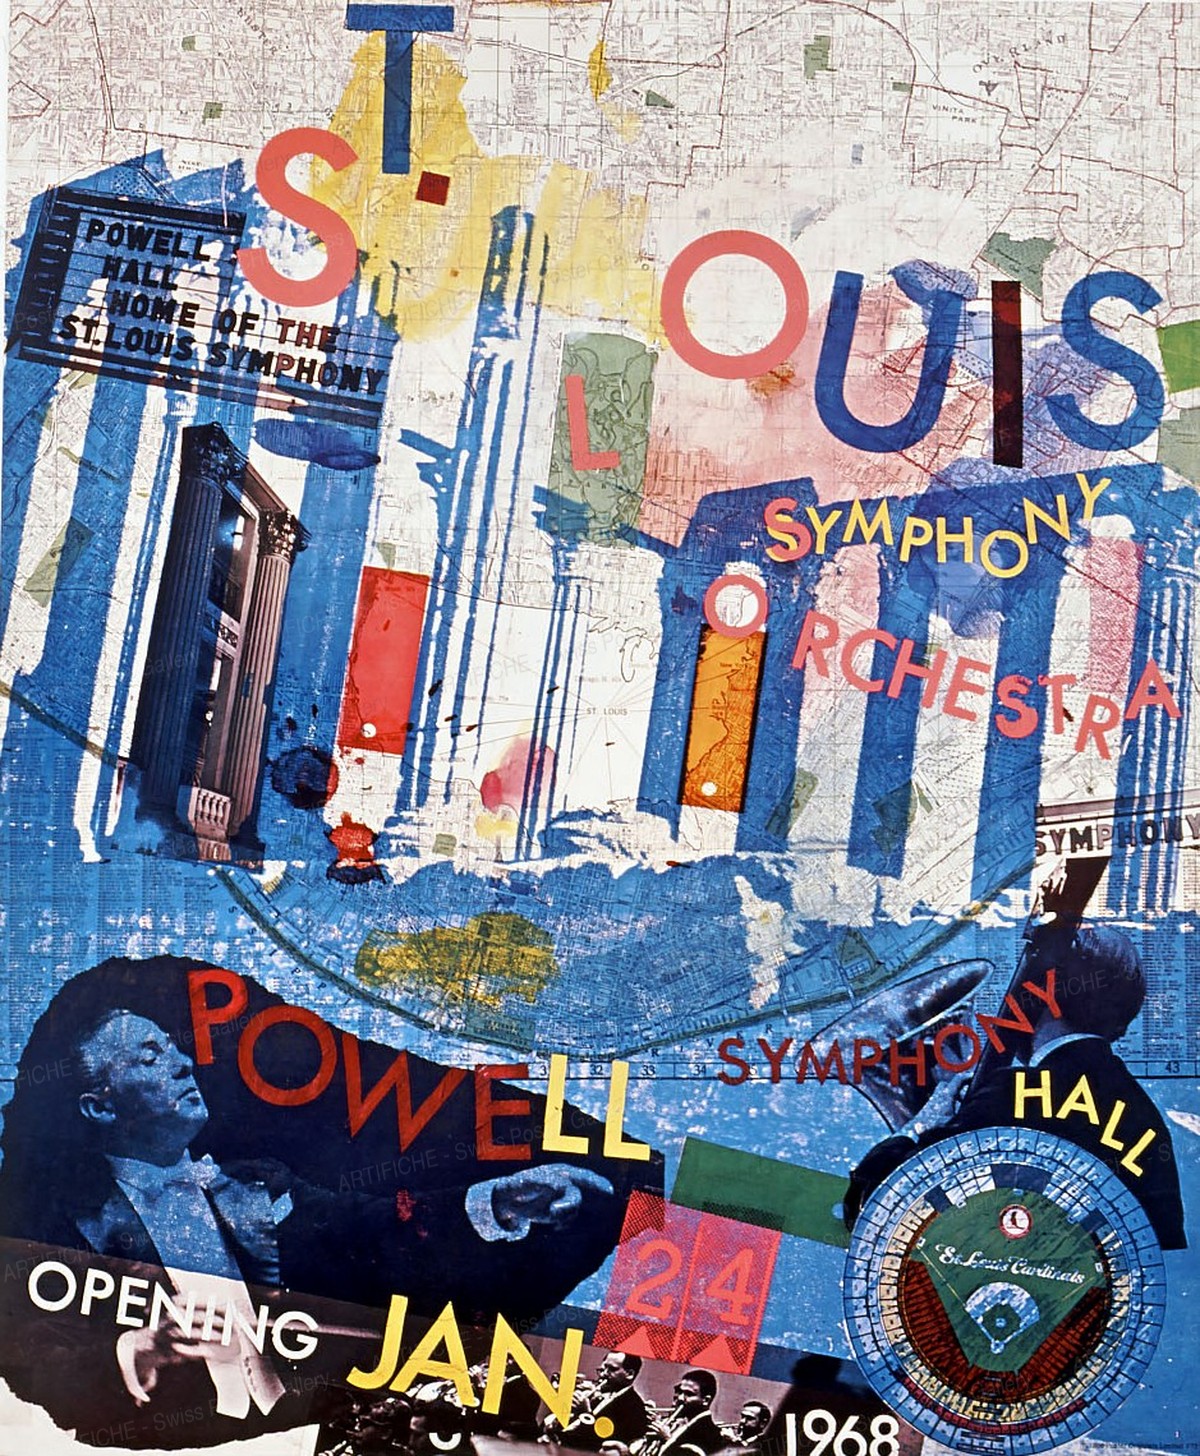 St. Louis Symphony Orchestra, Robert Rauschenberg